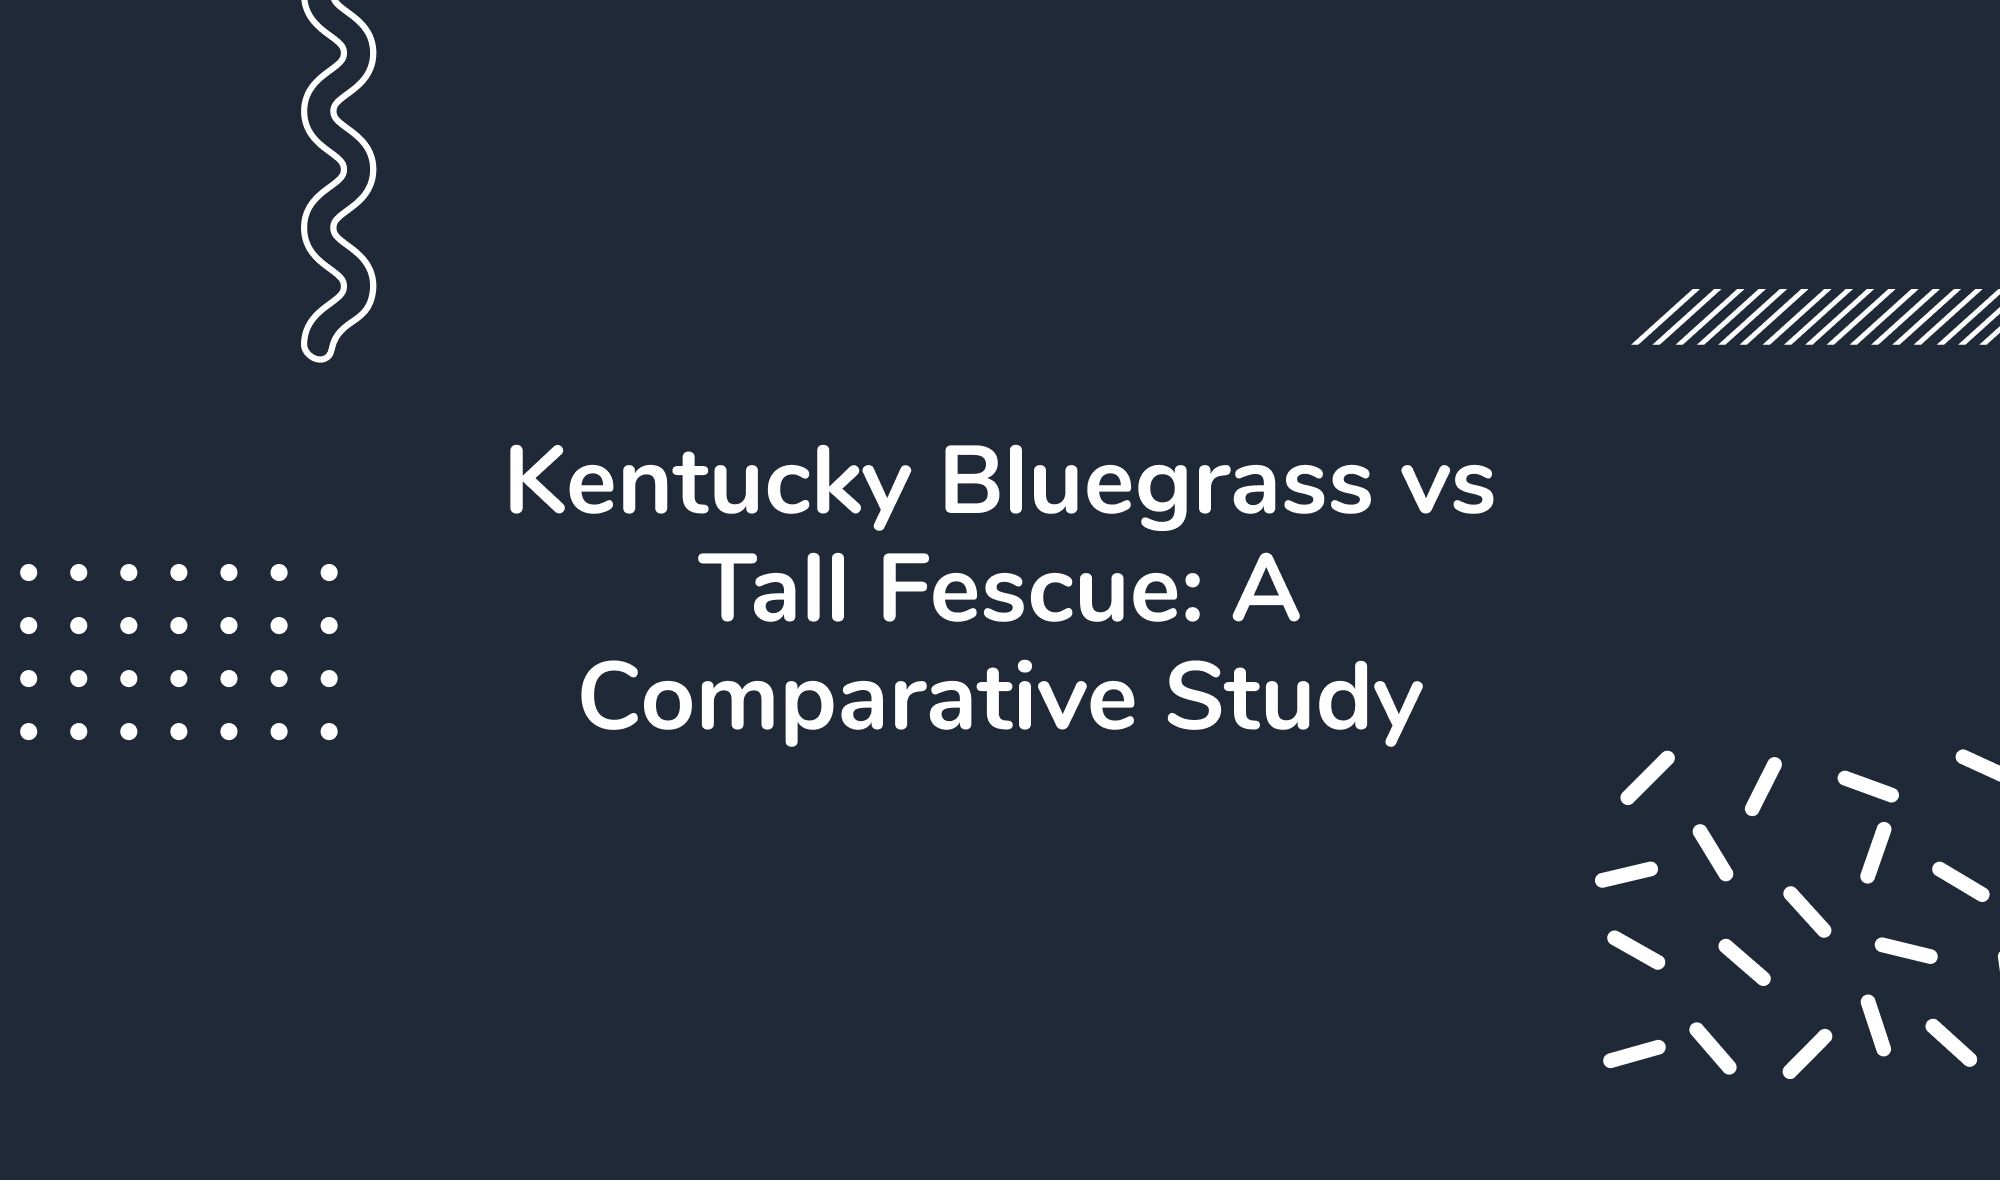 Kentucky Bluegrass vs Tall Fescue: A Comparative Study